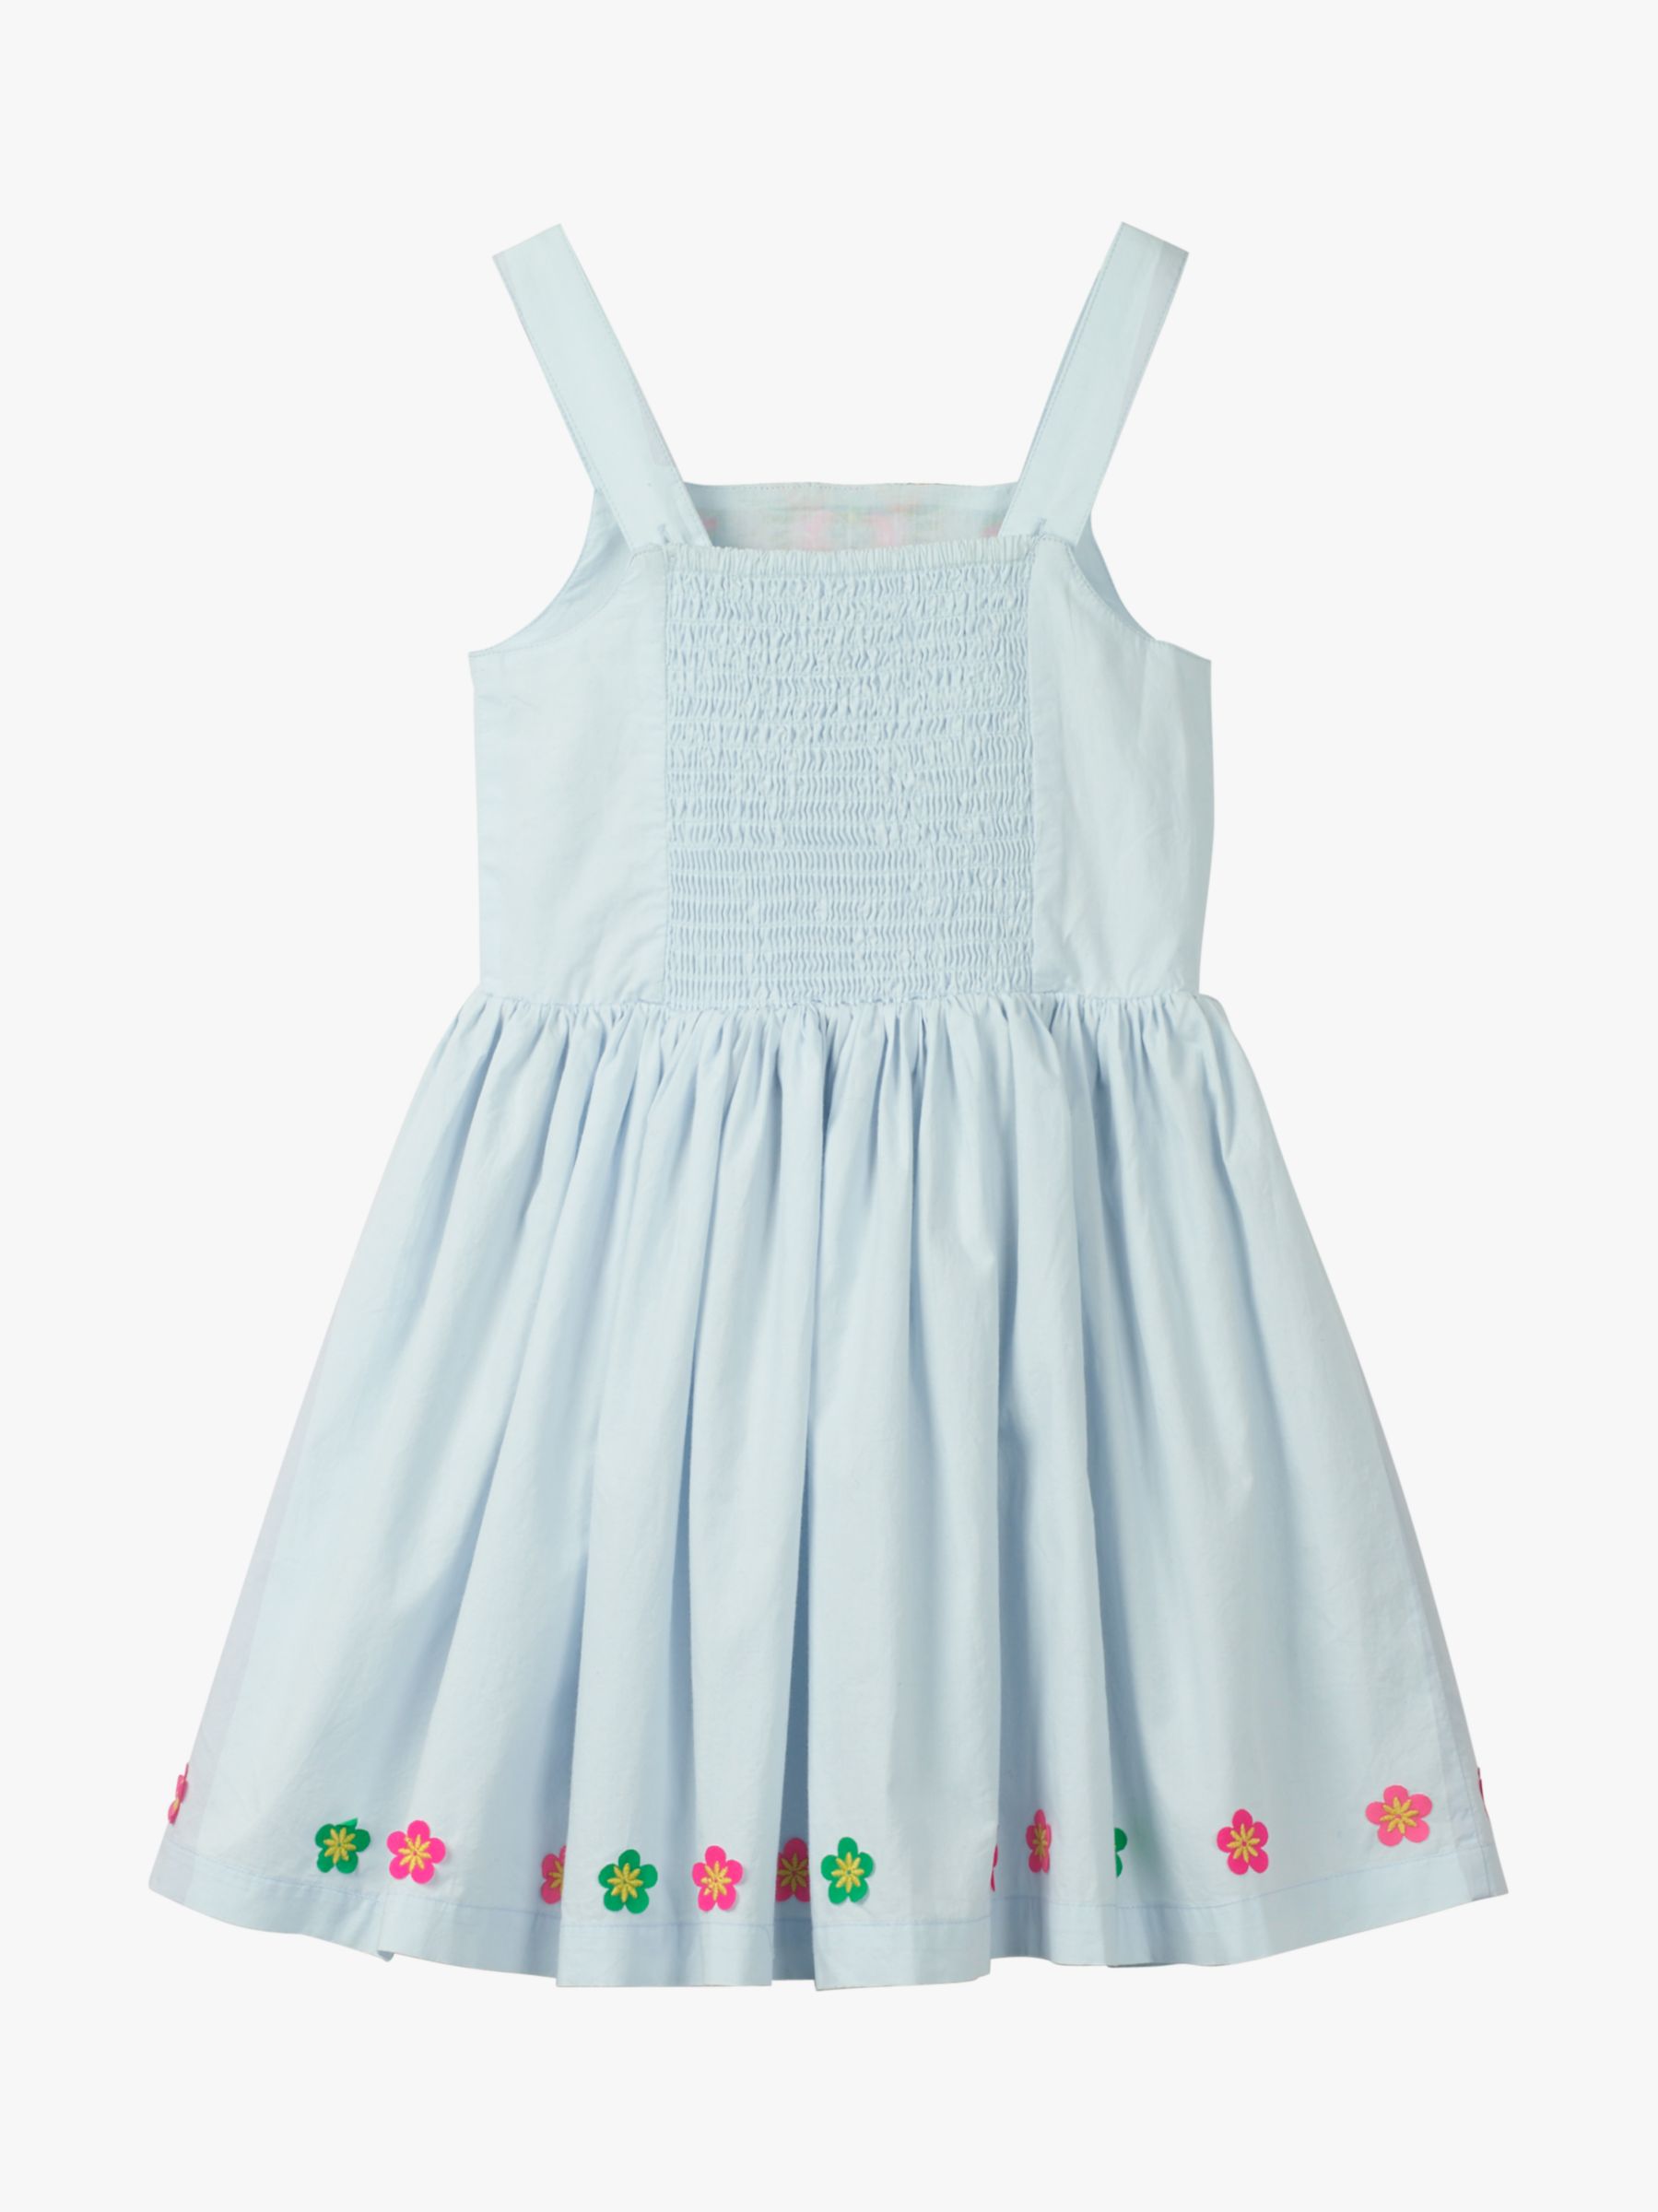 Mini Boden Girls' Bright Flower Embroidered Dress, Ocean Spray Blue